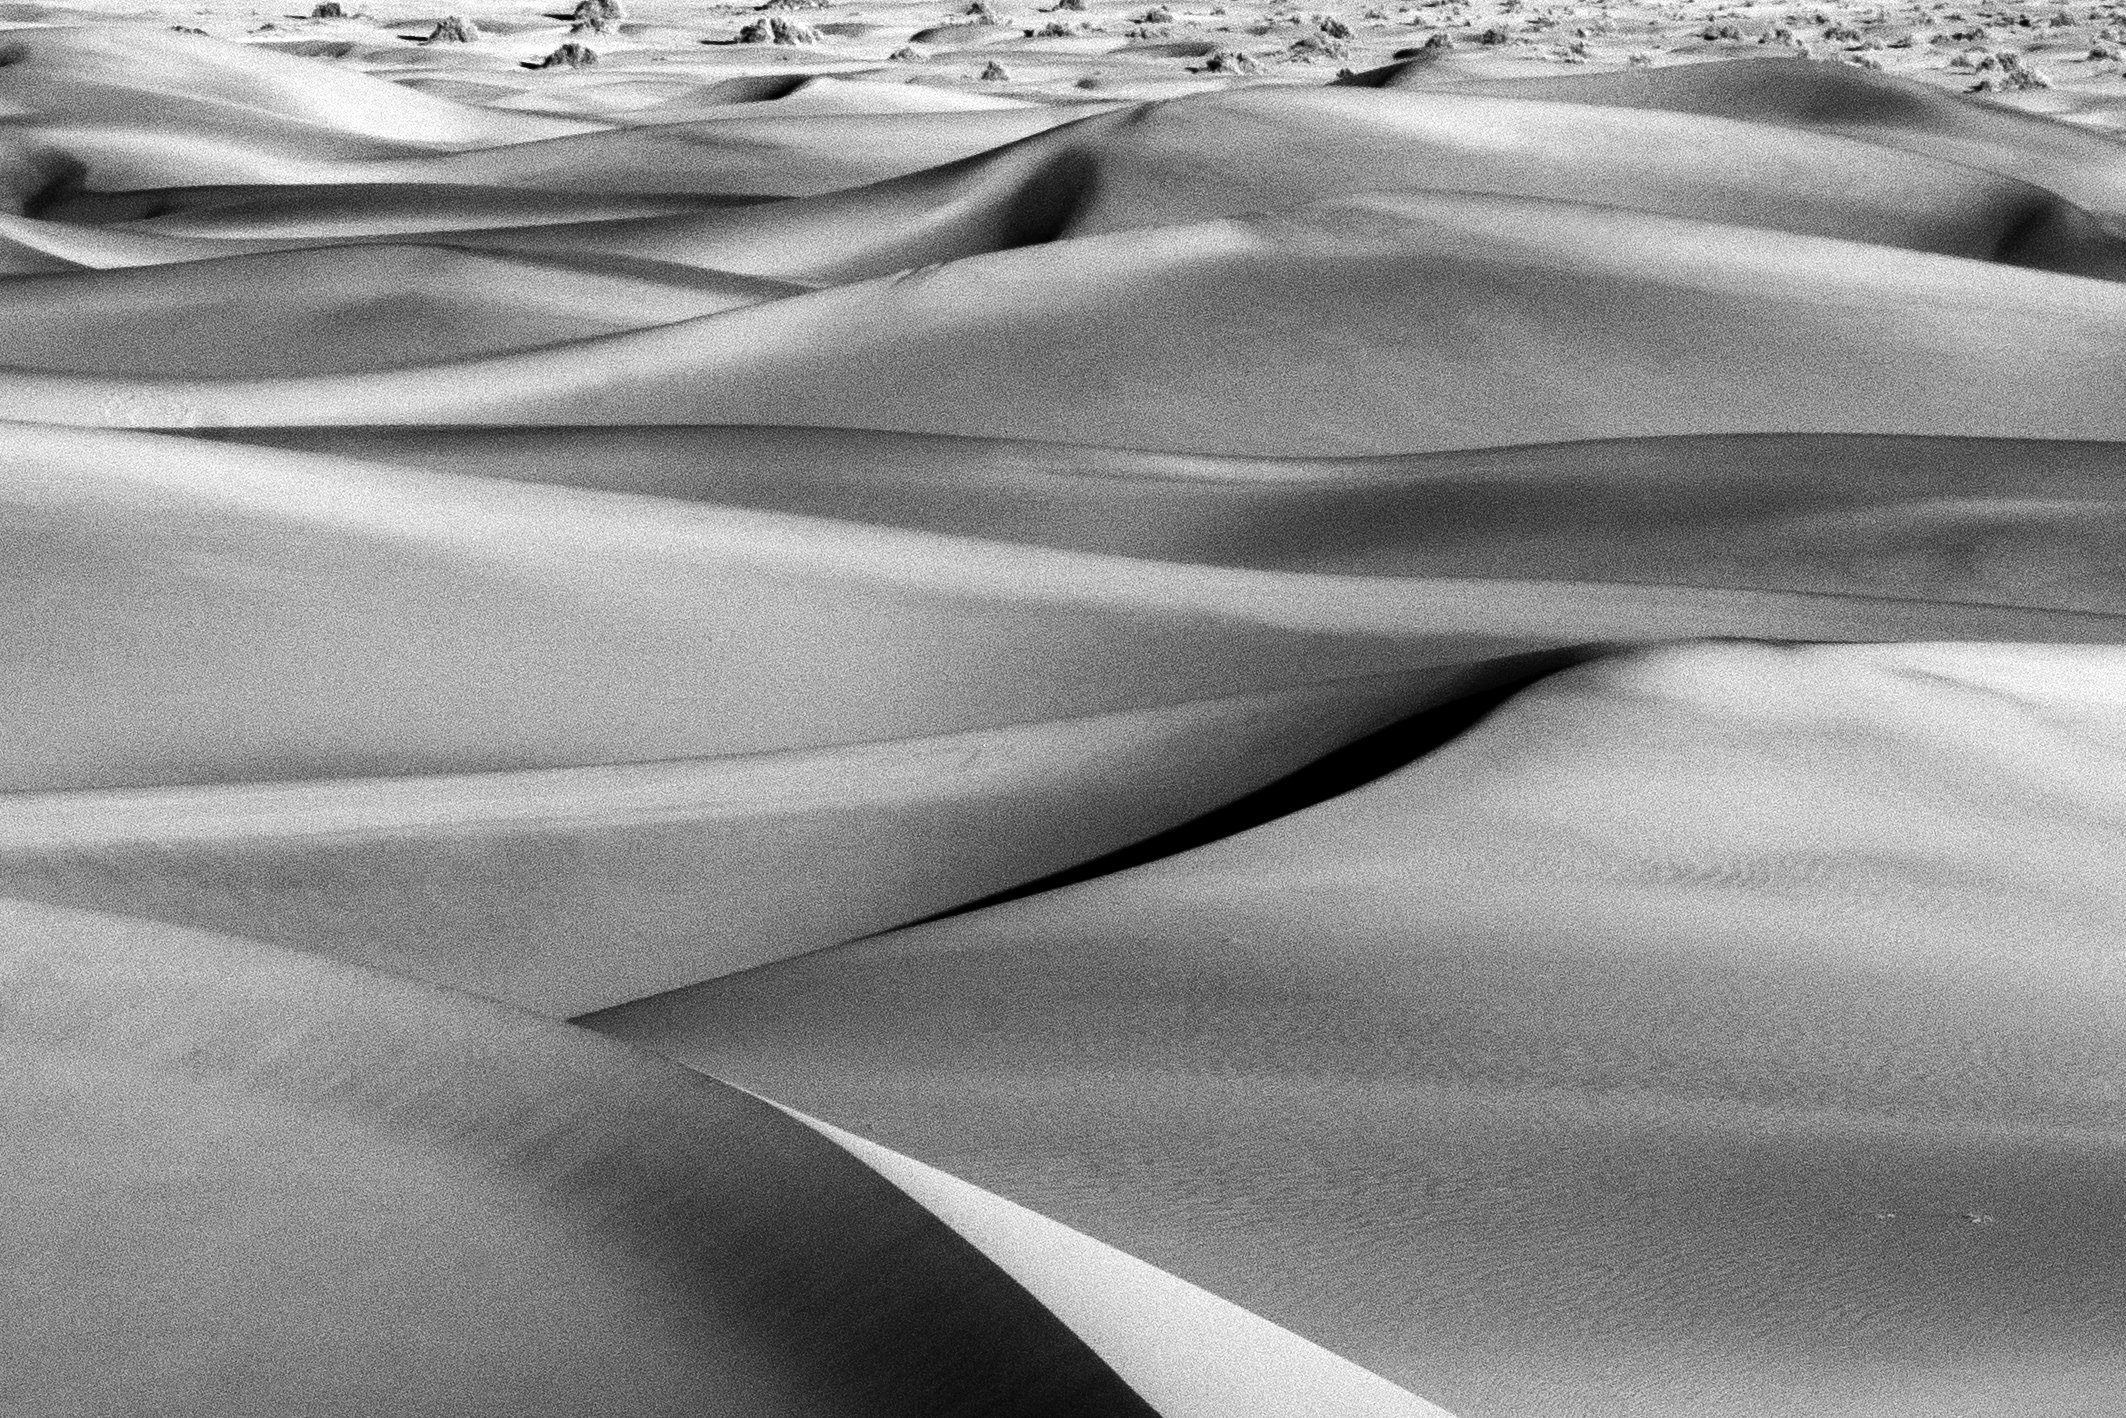 Sand Dune Shadow Touch Death Valley California.jpg